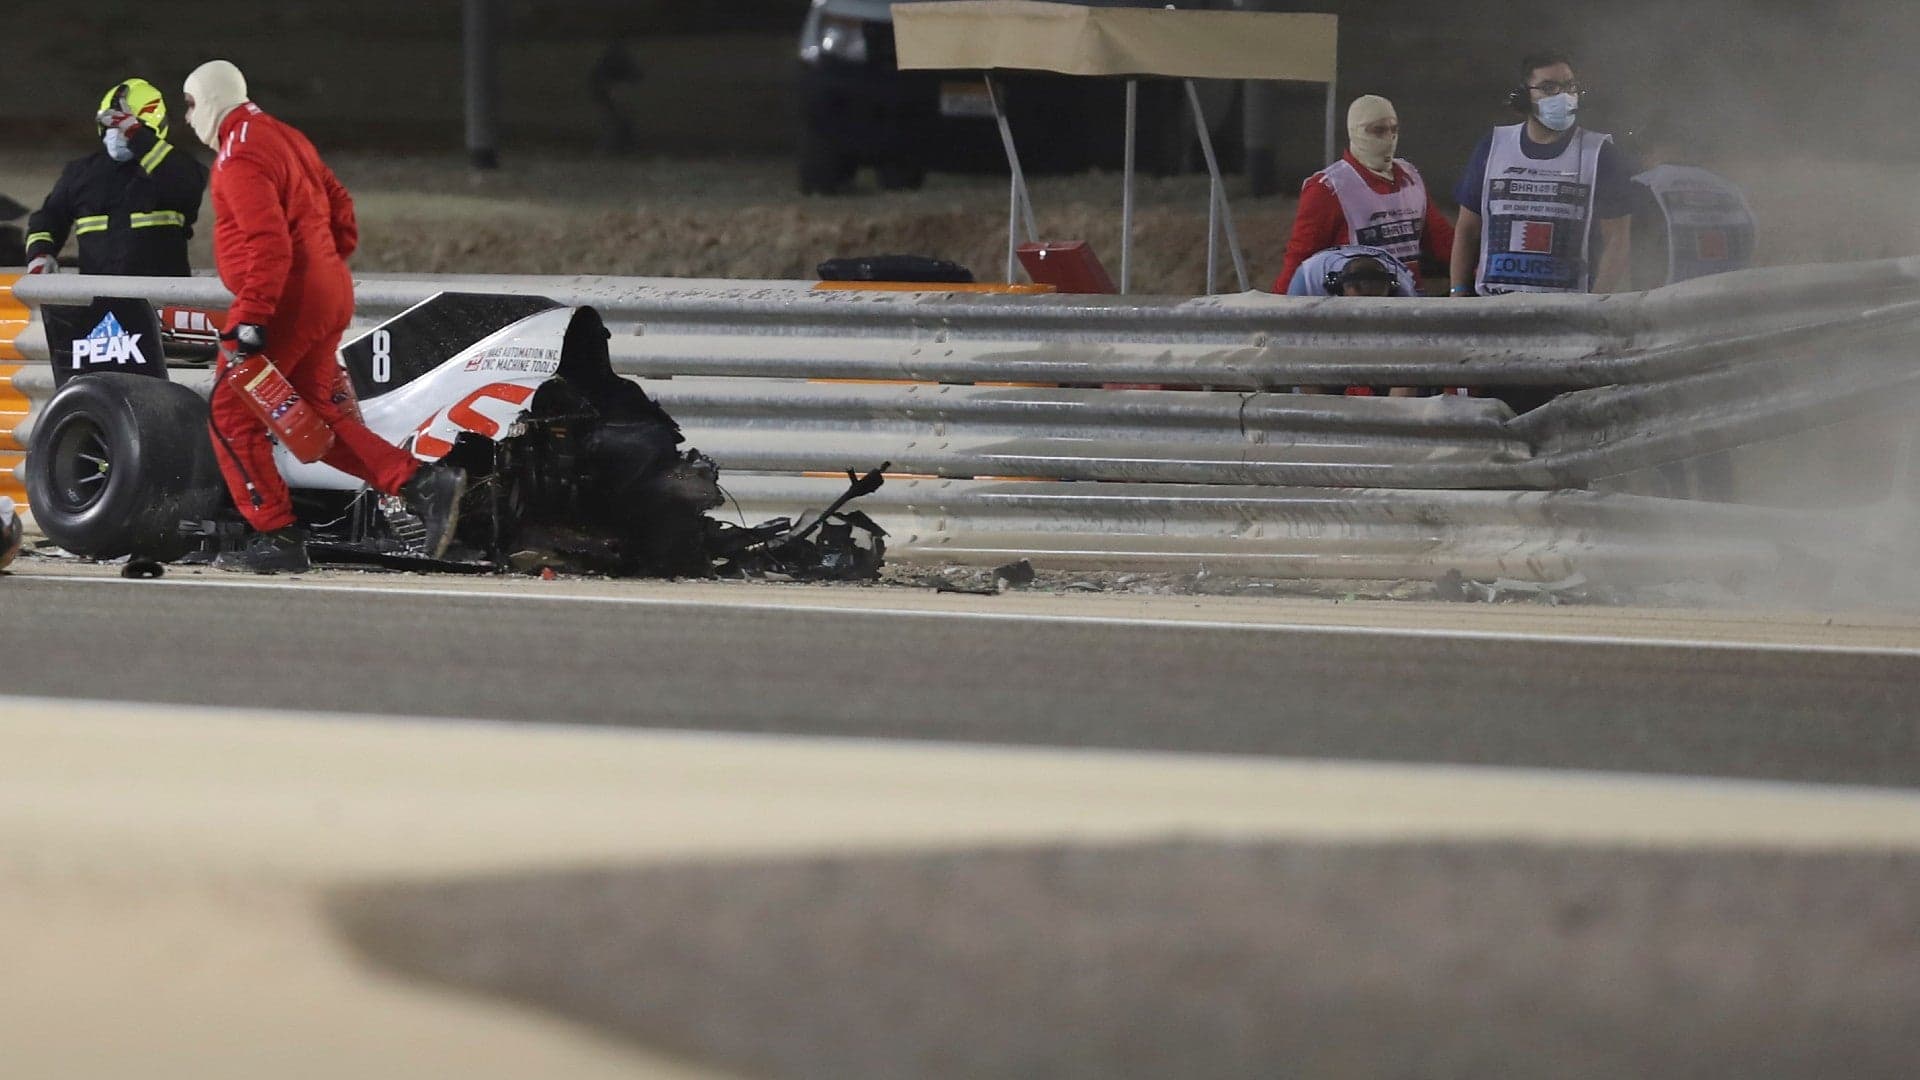 Racing Roundup: Grosjean Says He ‘Saw Death’ During F1 Crash, Chili Bowl Heats Up, NASCAR Mourns